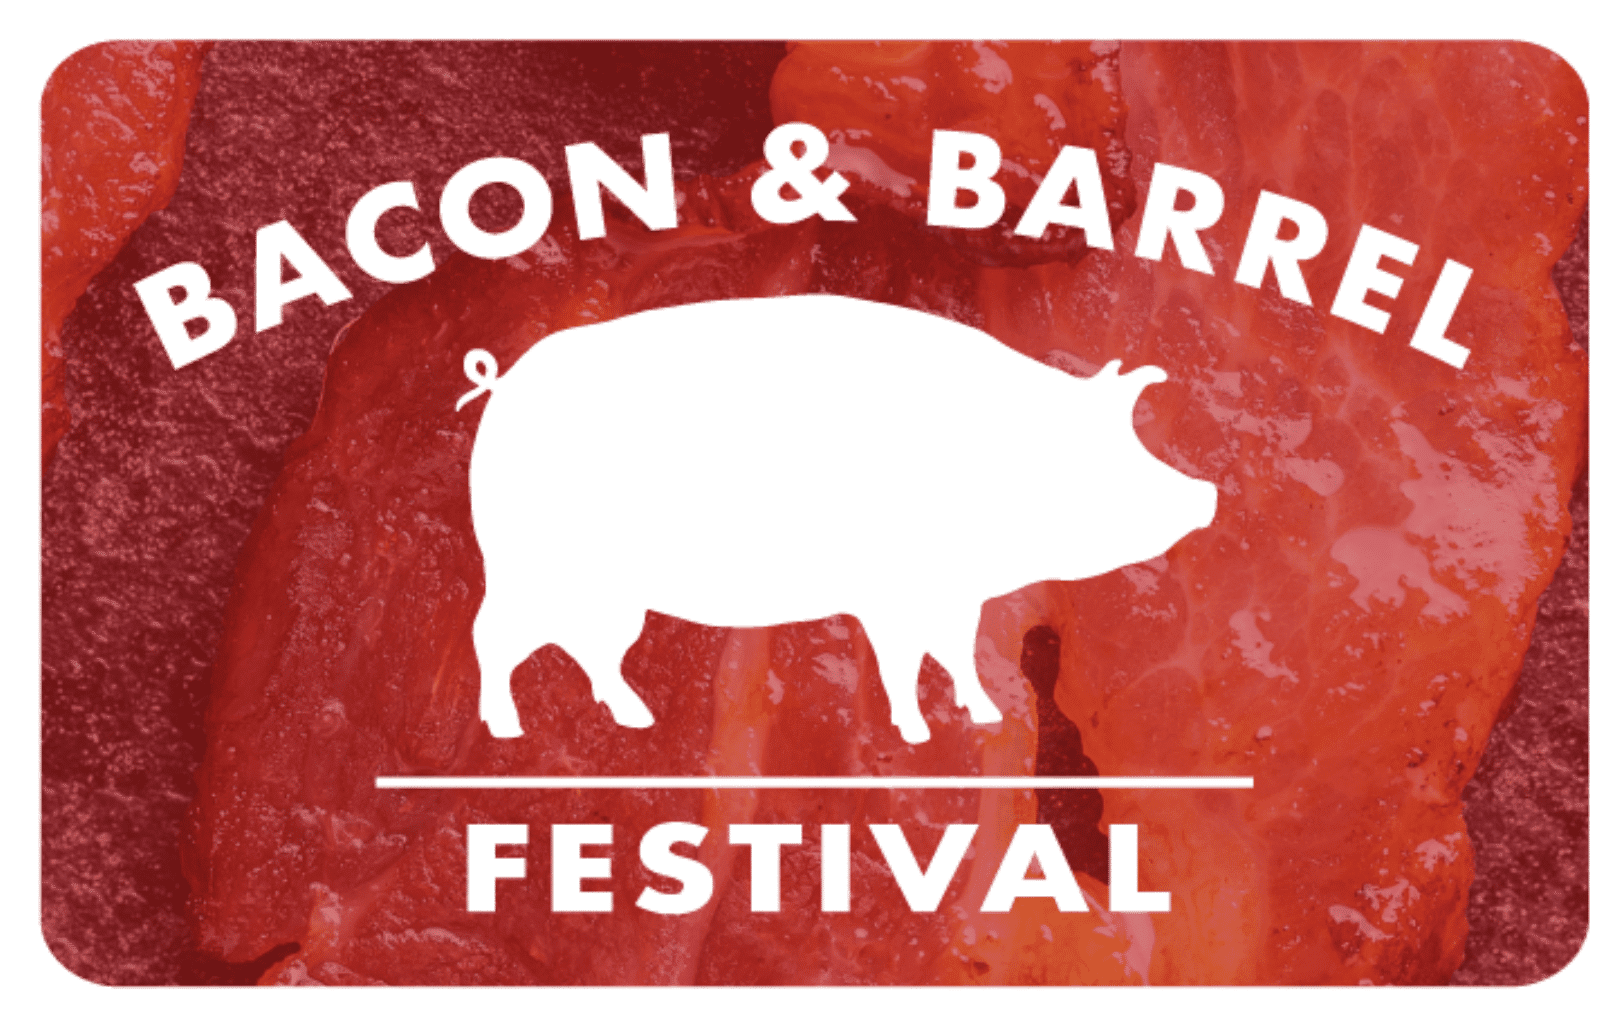 Music City Bacon & Barrel Festival in Nashville, Tennessee.